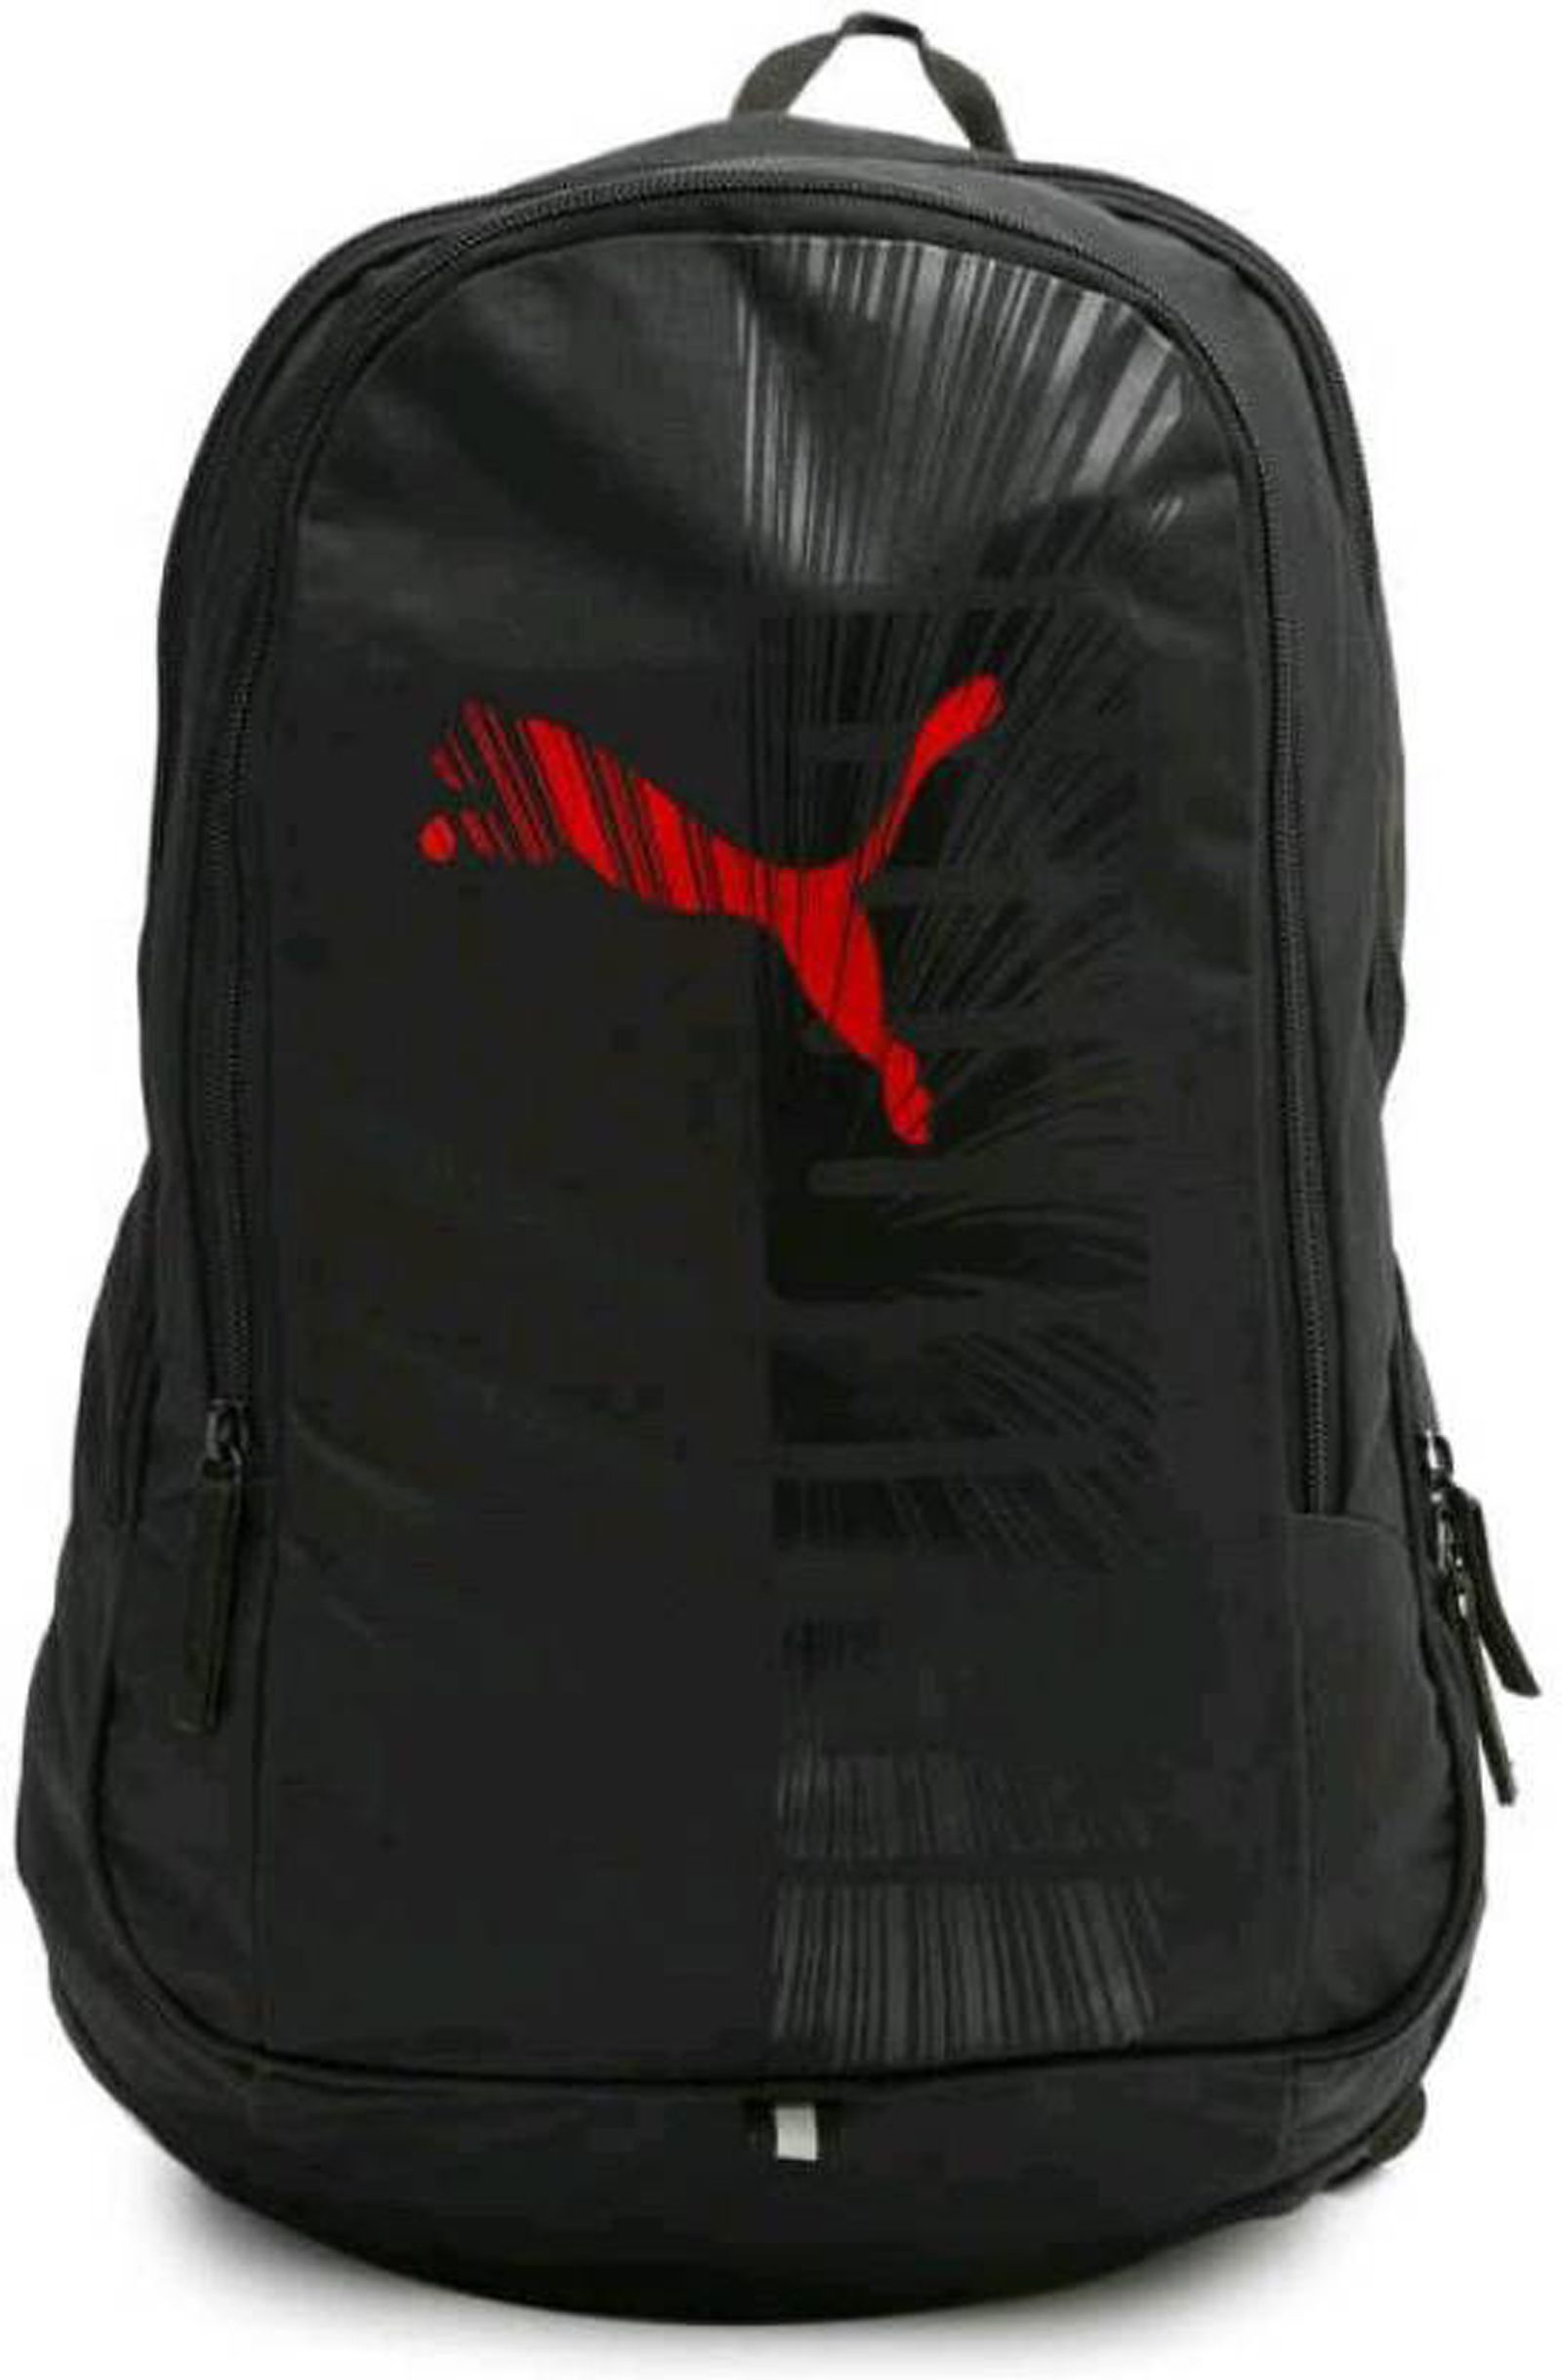 puma school bag price